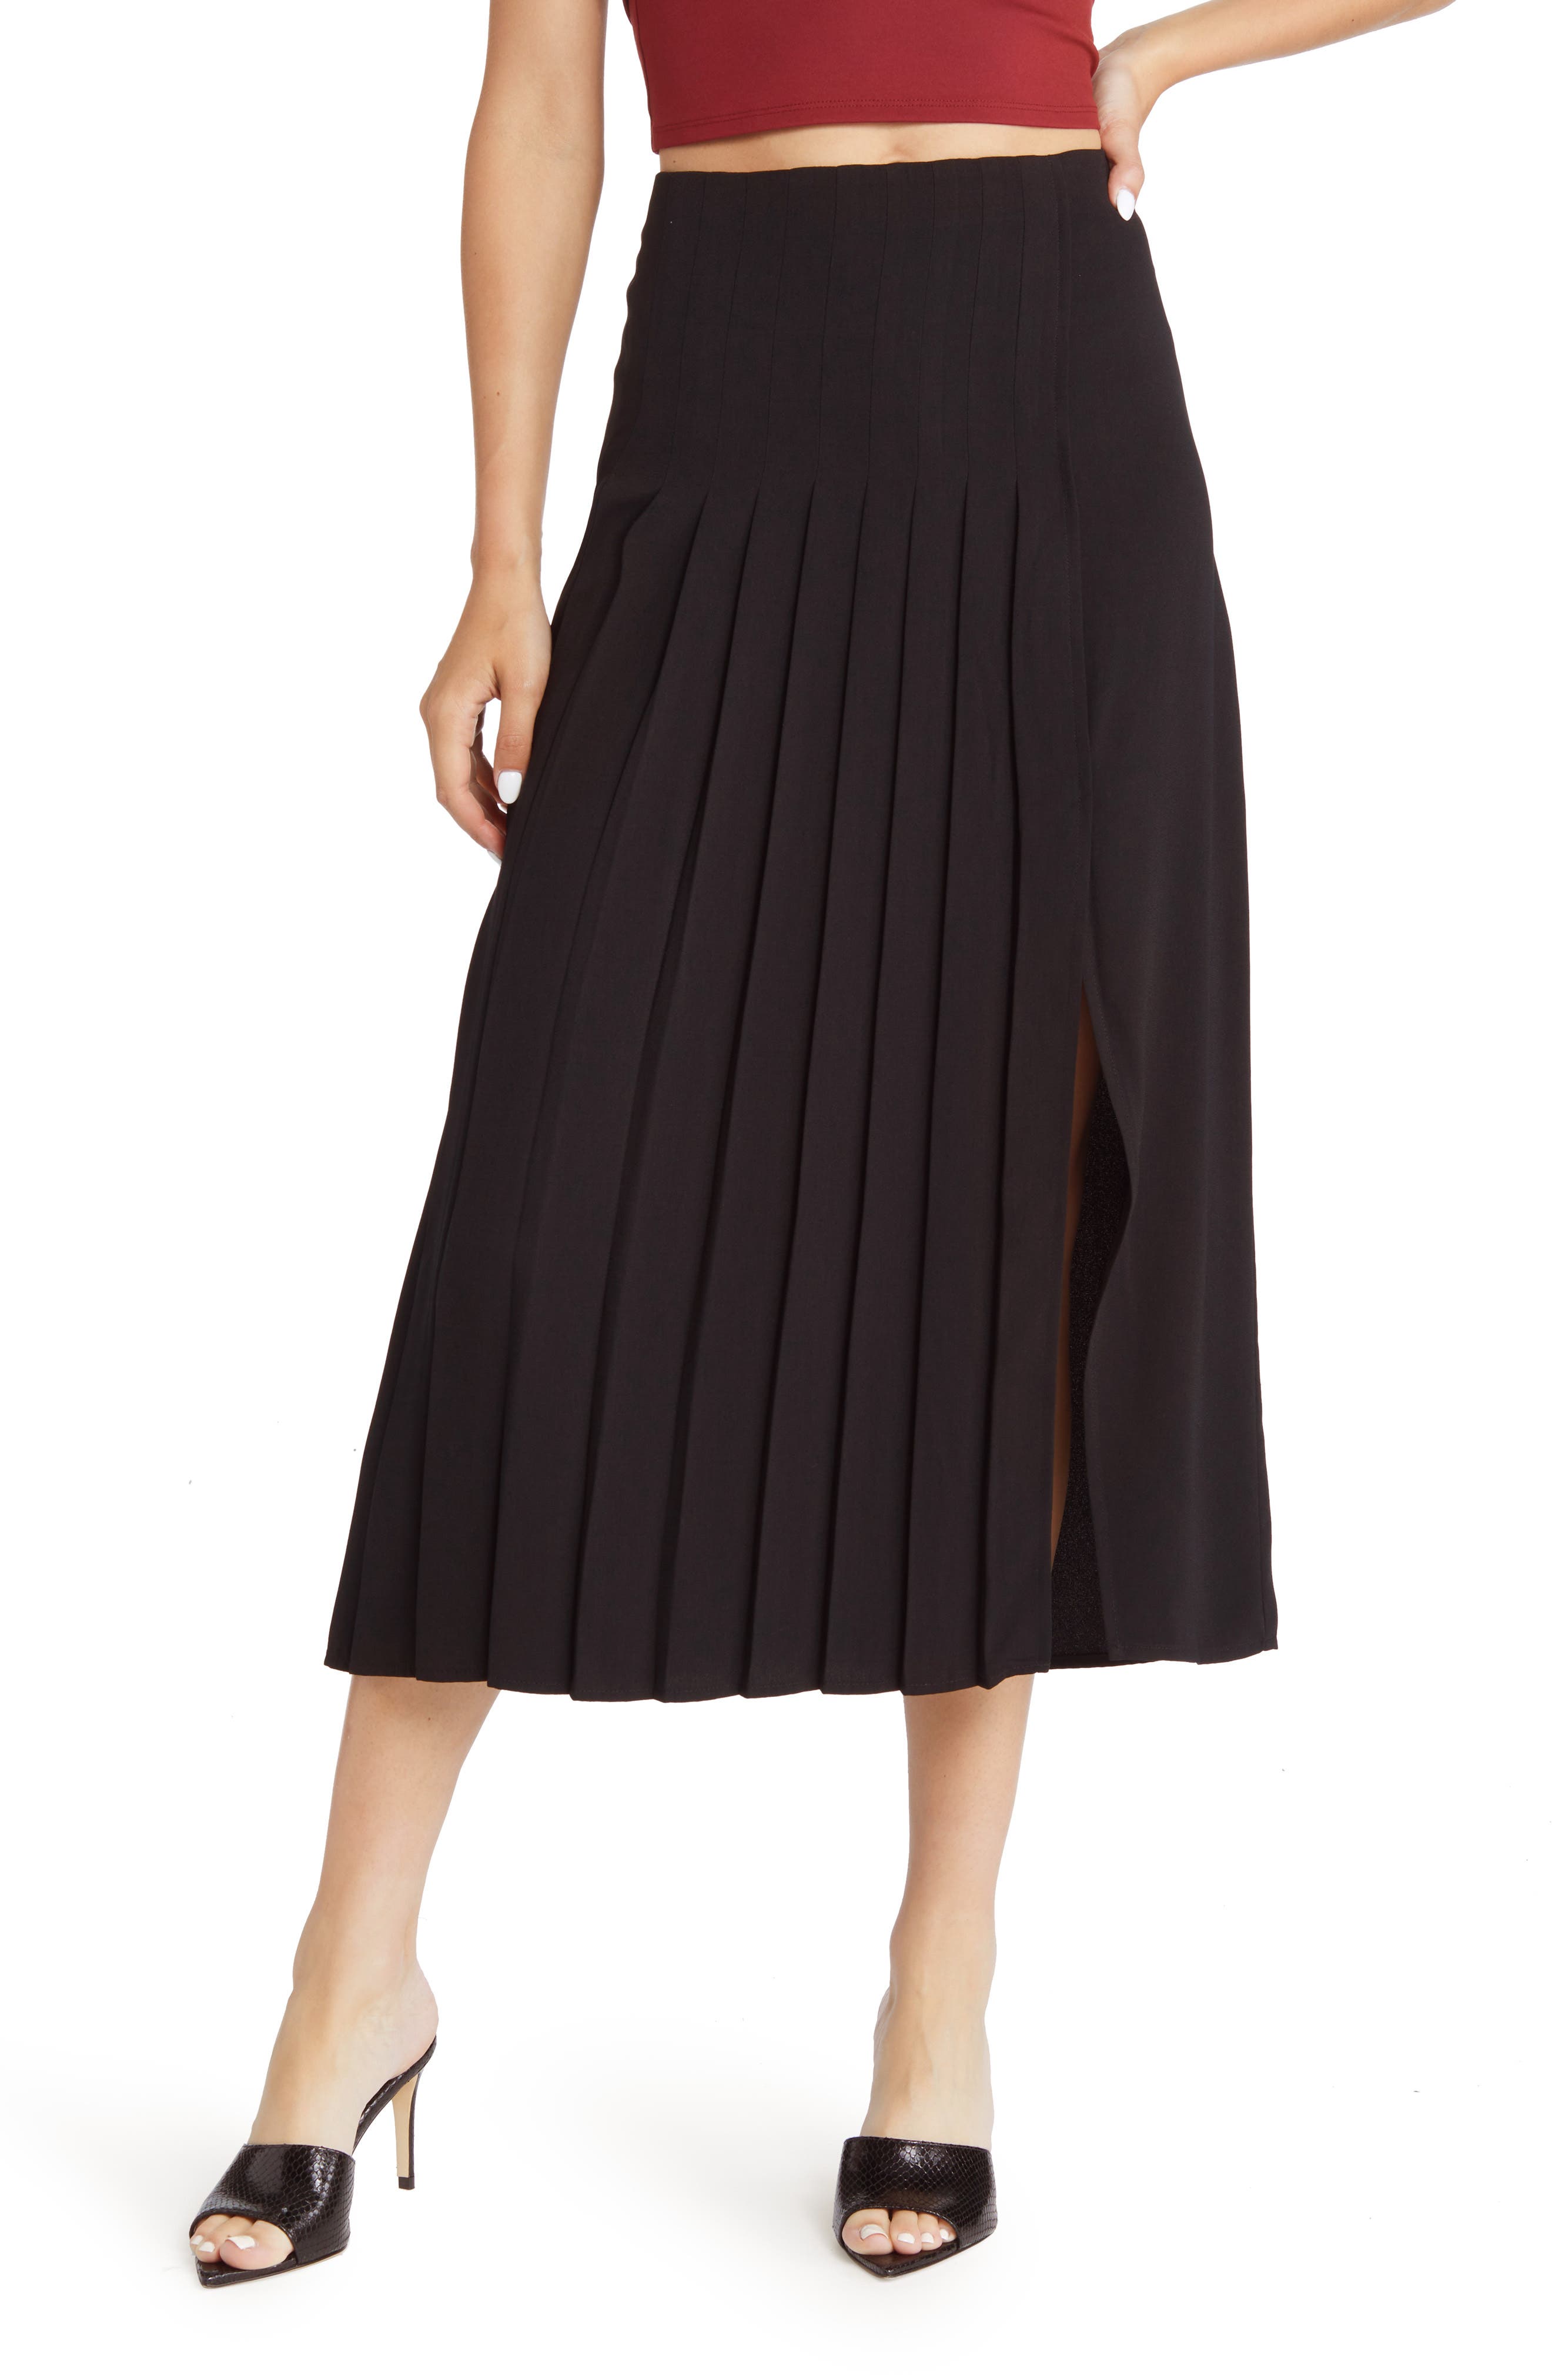 Comme des Garçons Black & White Cotton Midi Skirt Womens Clothing Skirts Mid-length skirts 